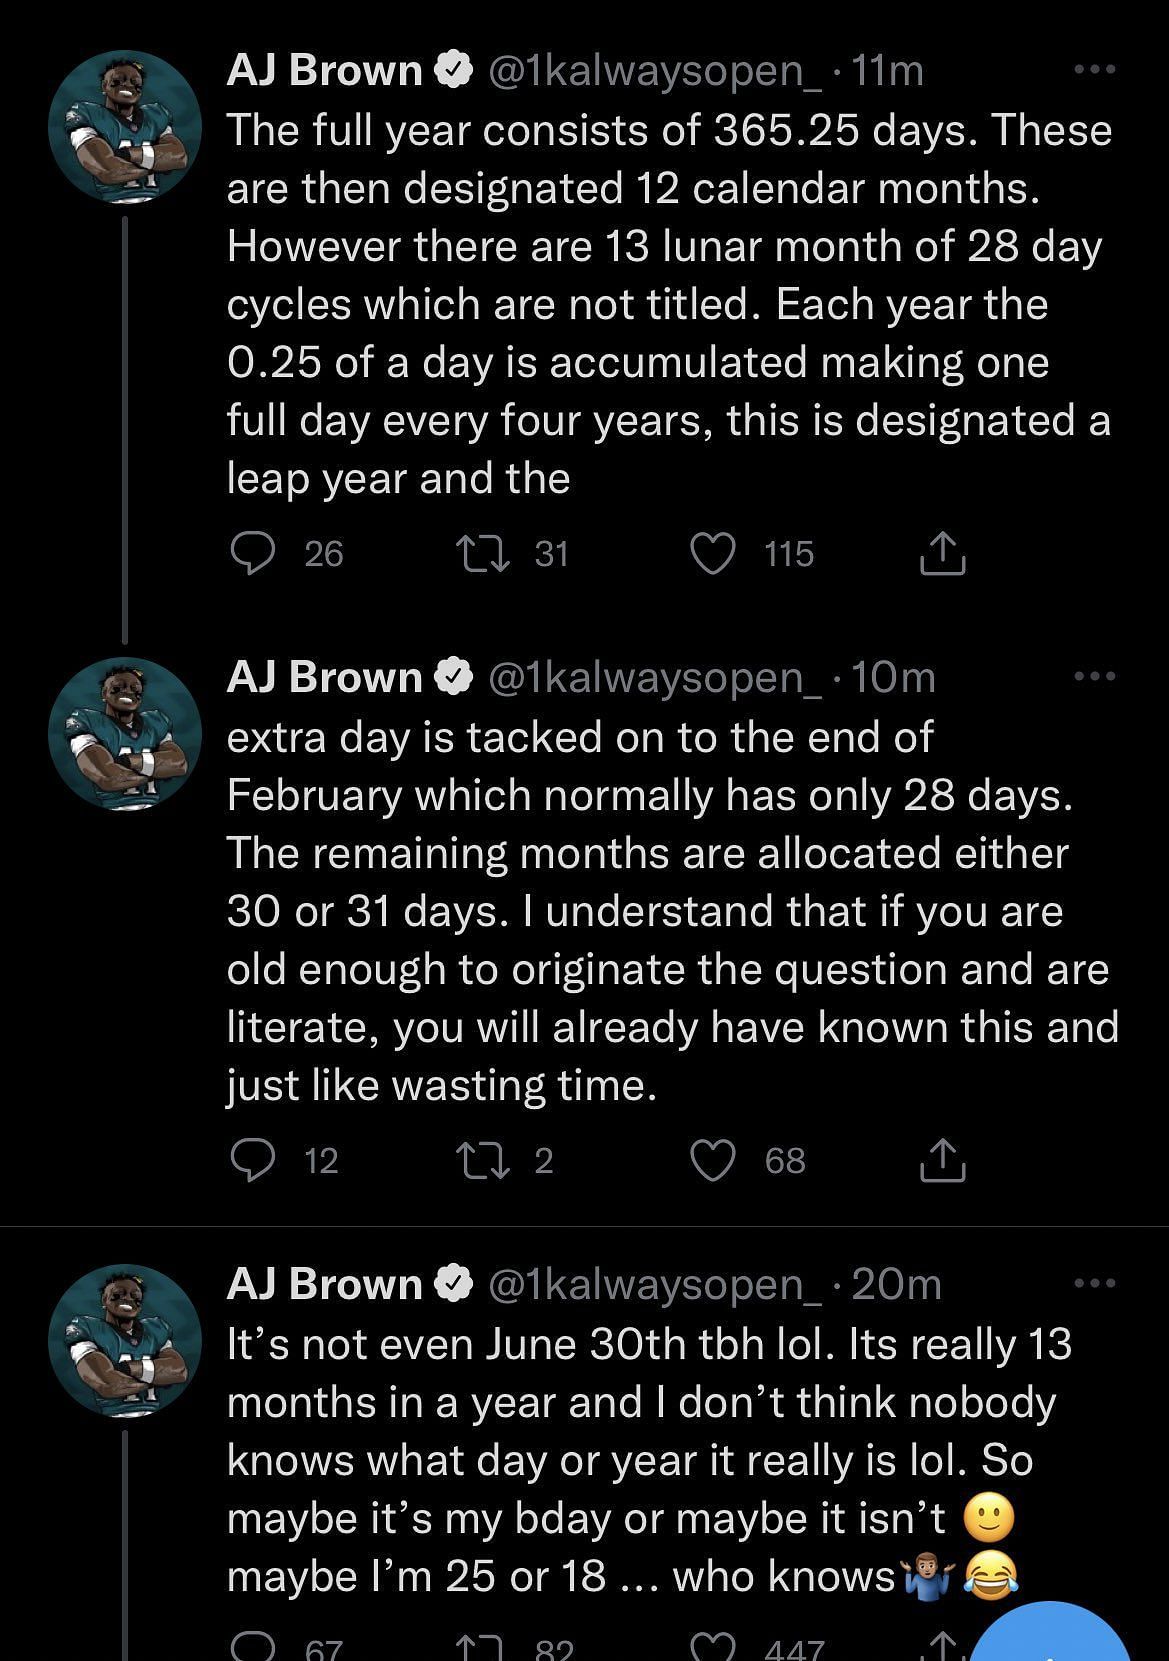 AJ Brown's beliefs on the calendar